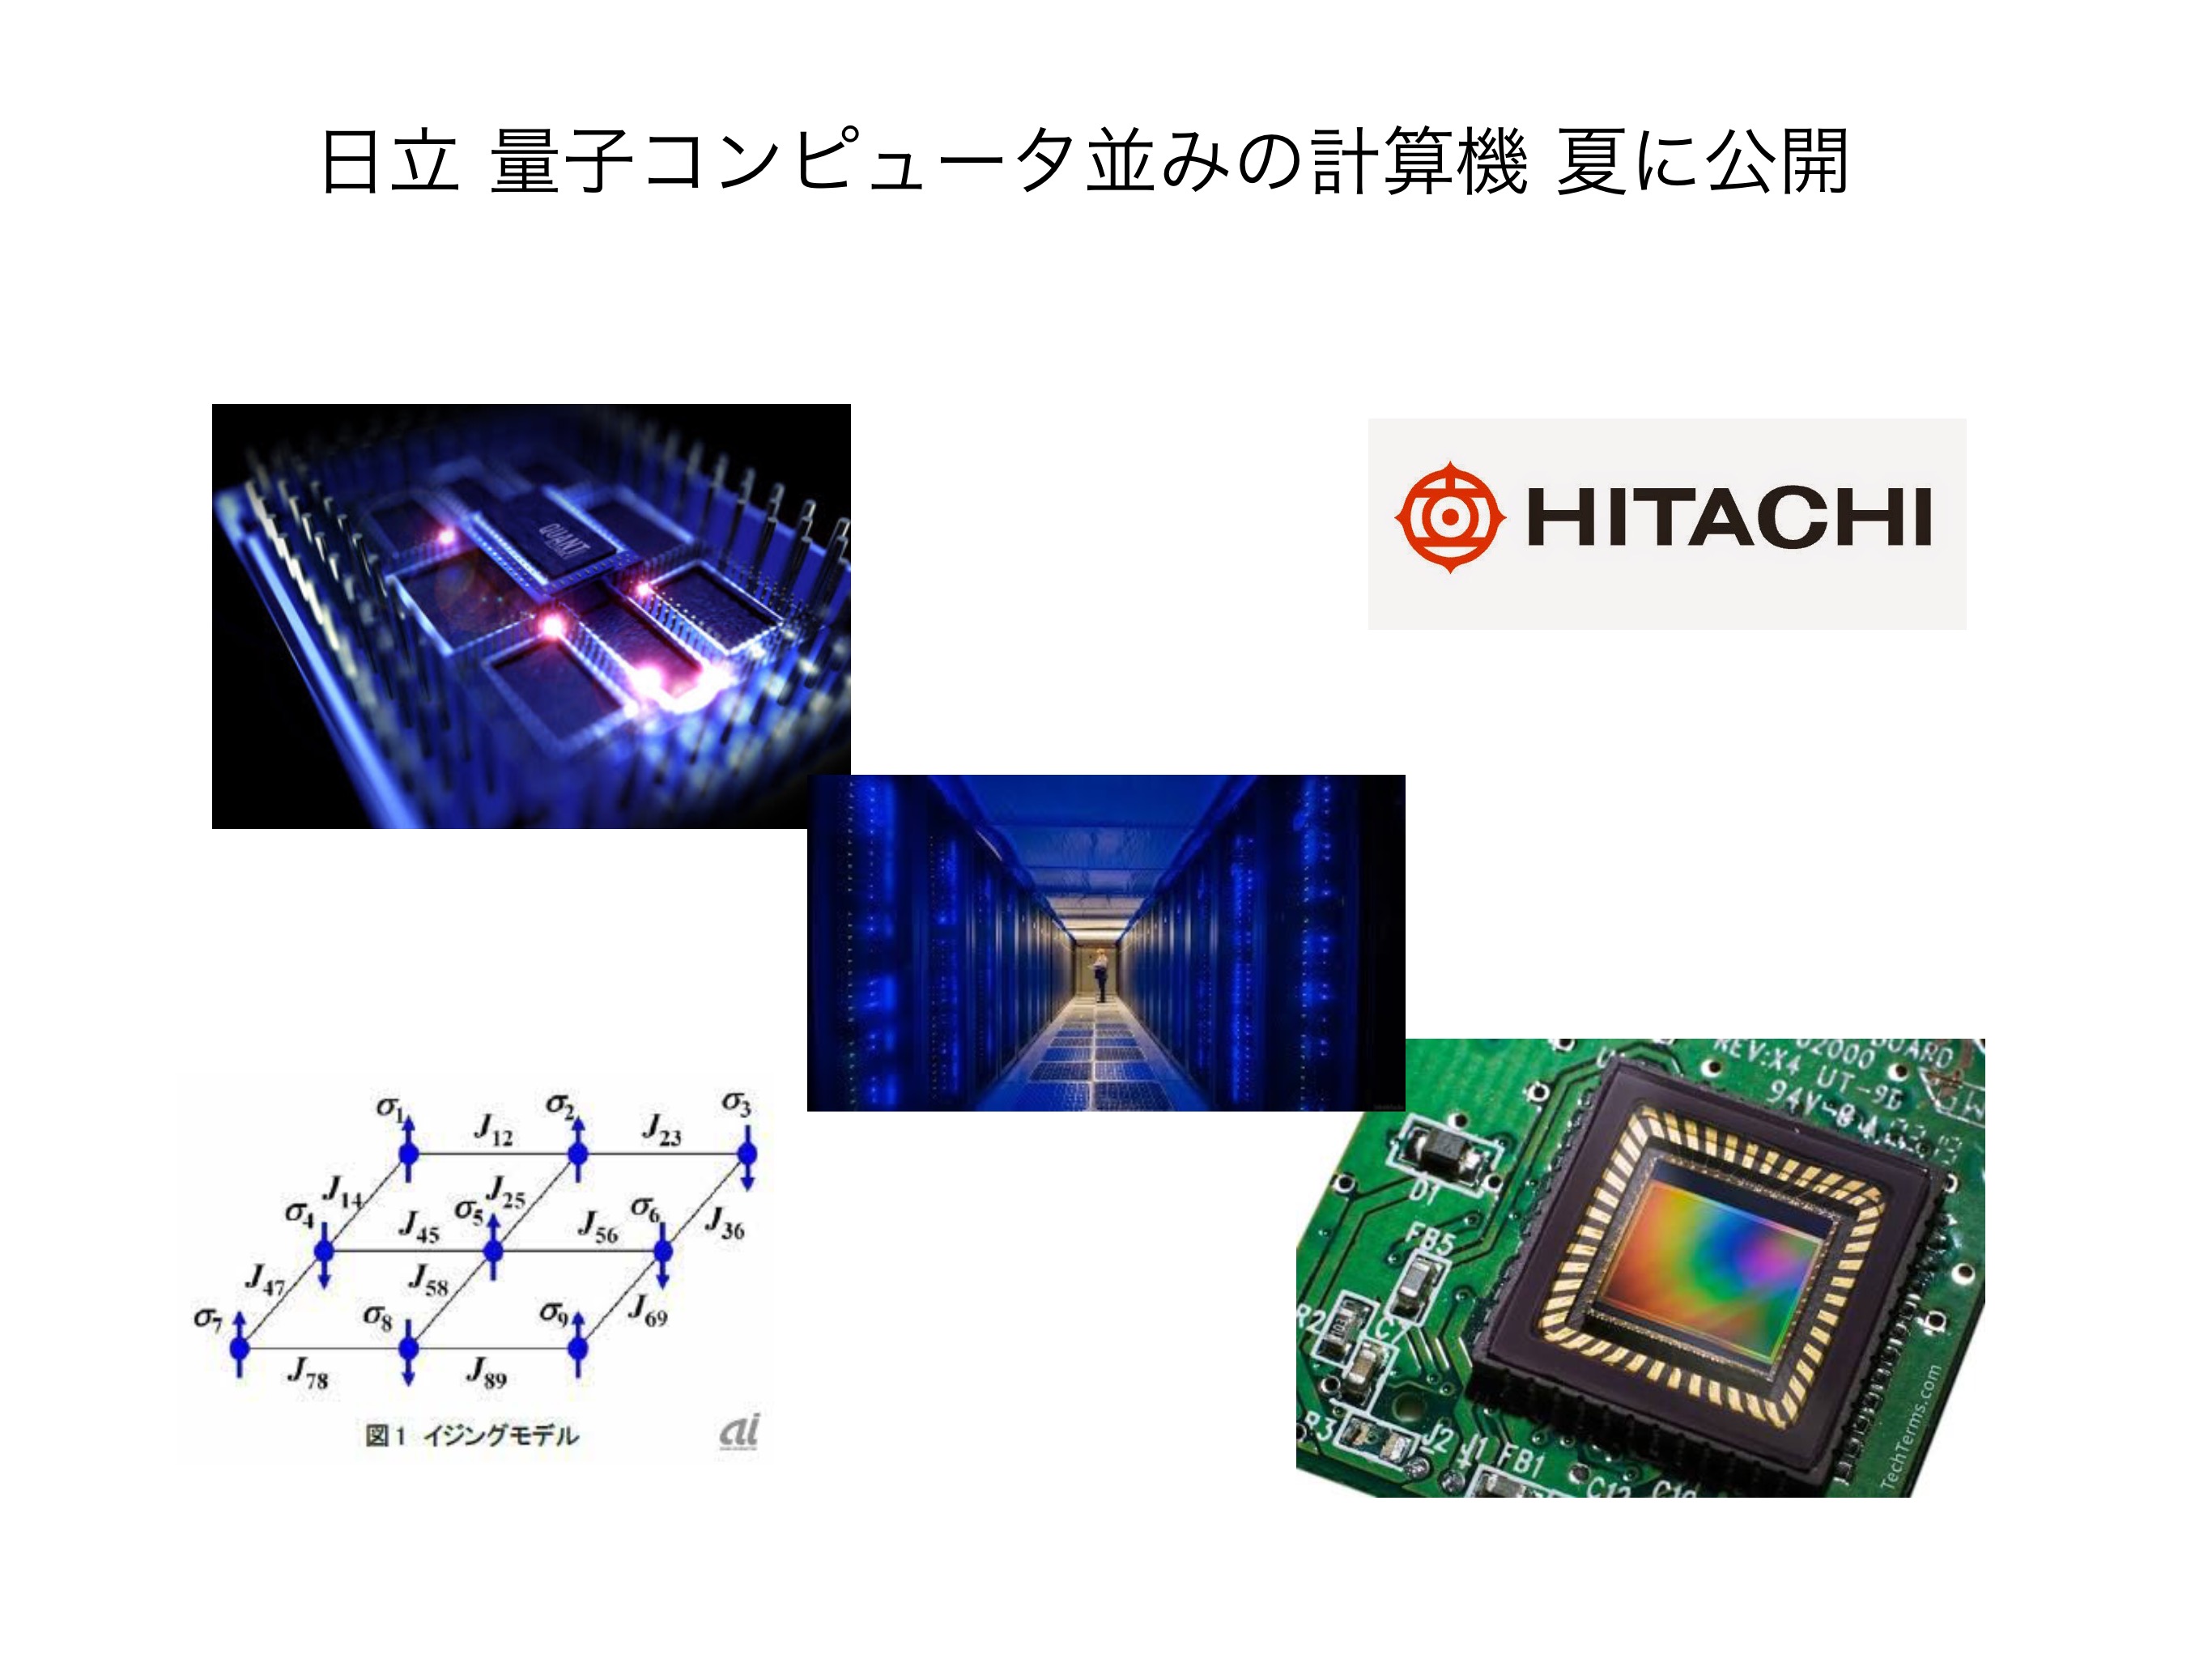 Hitachi computer